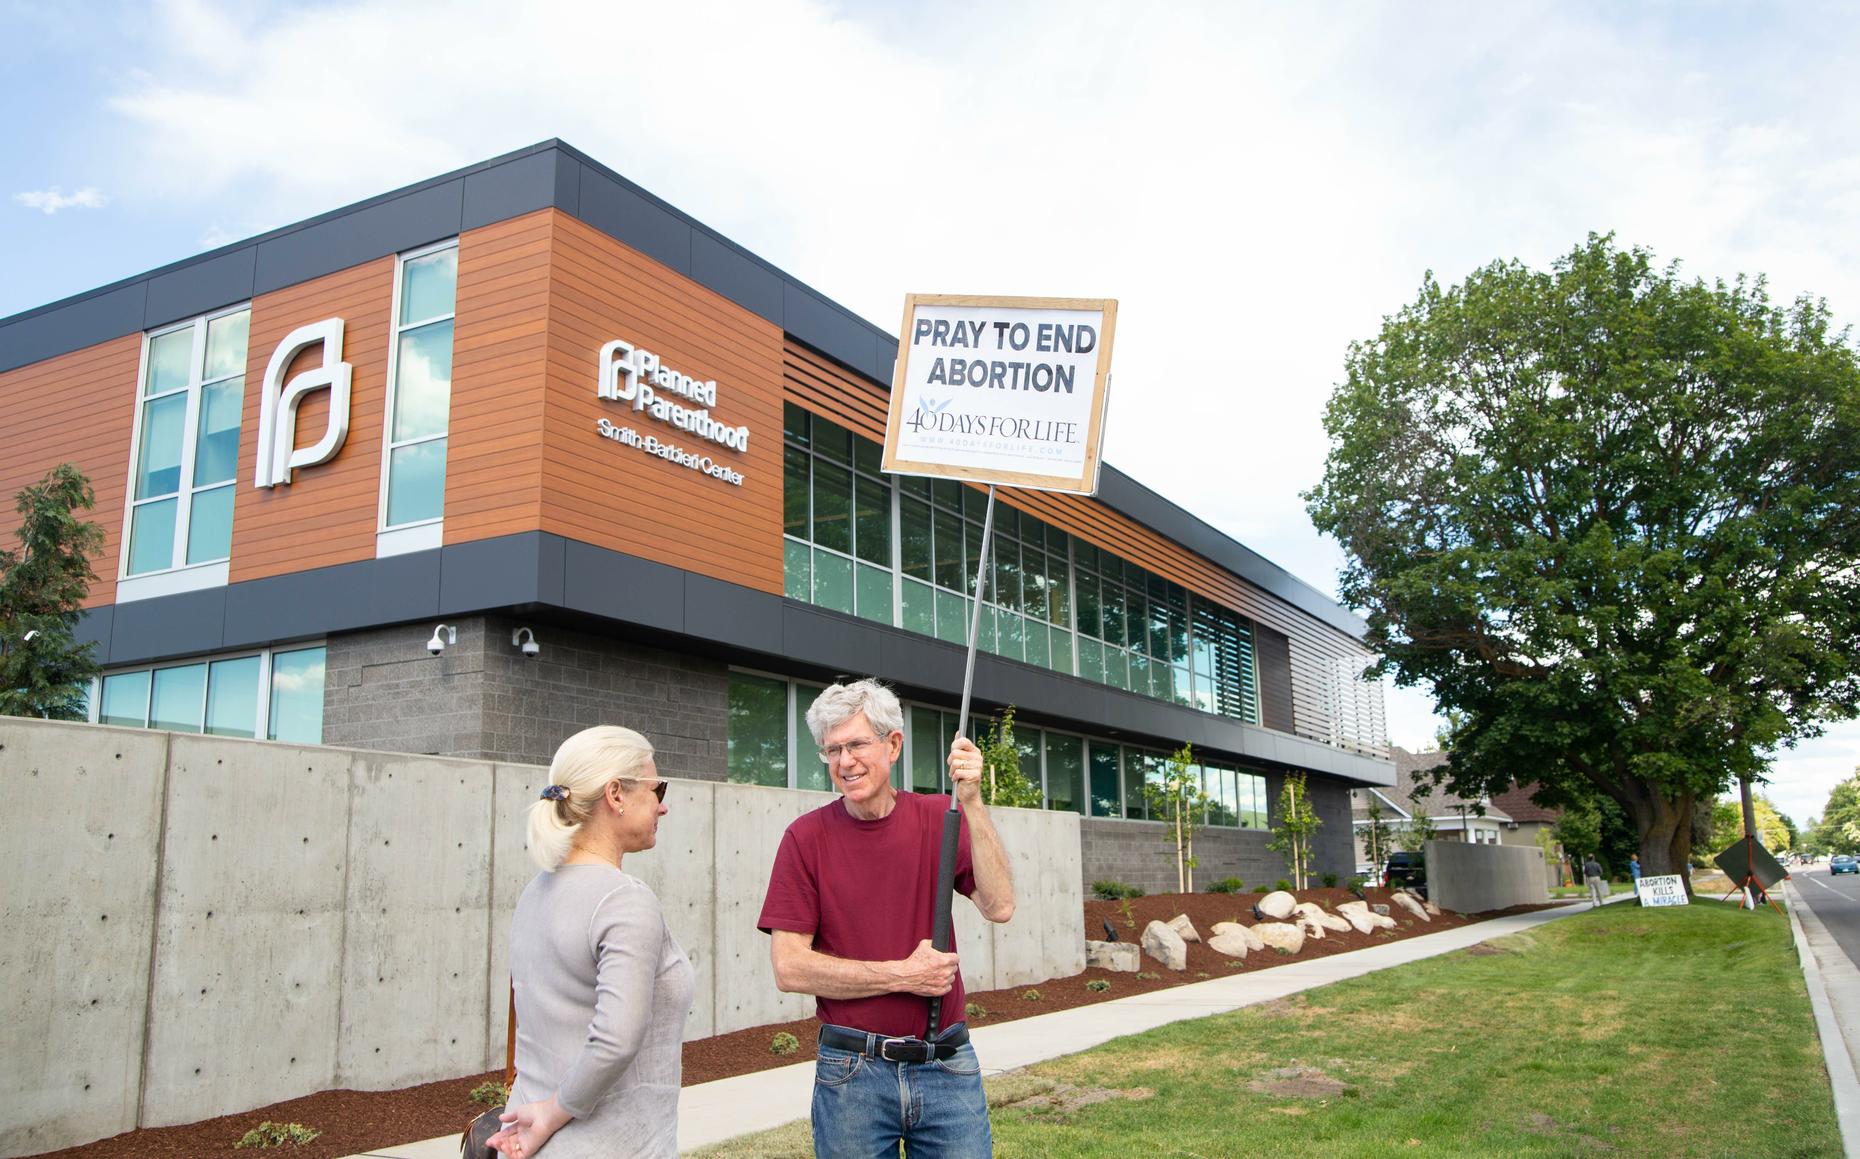 Indiana Health Ctr - PP of the Inland Northwest (Spokane, WA) - new building 1